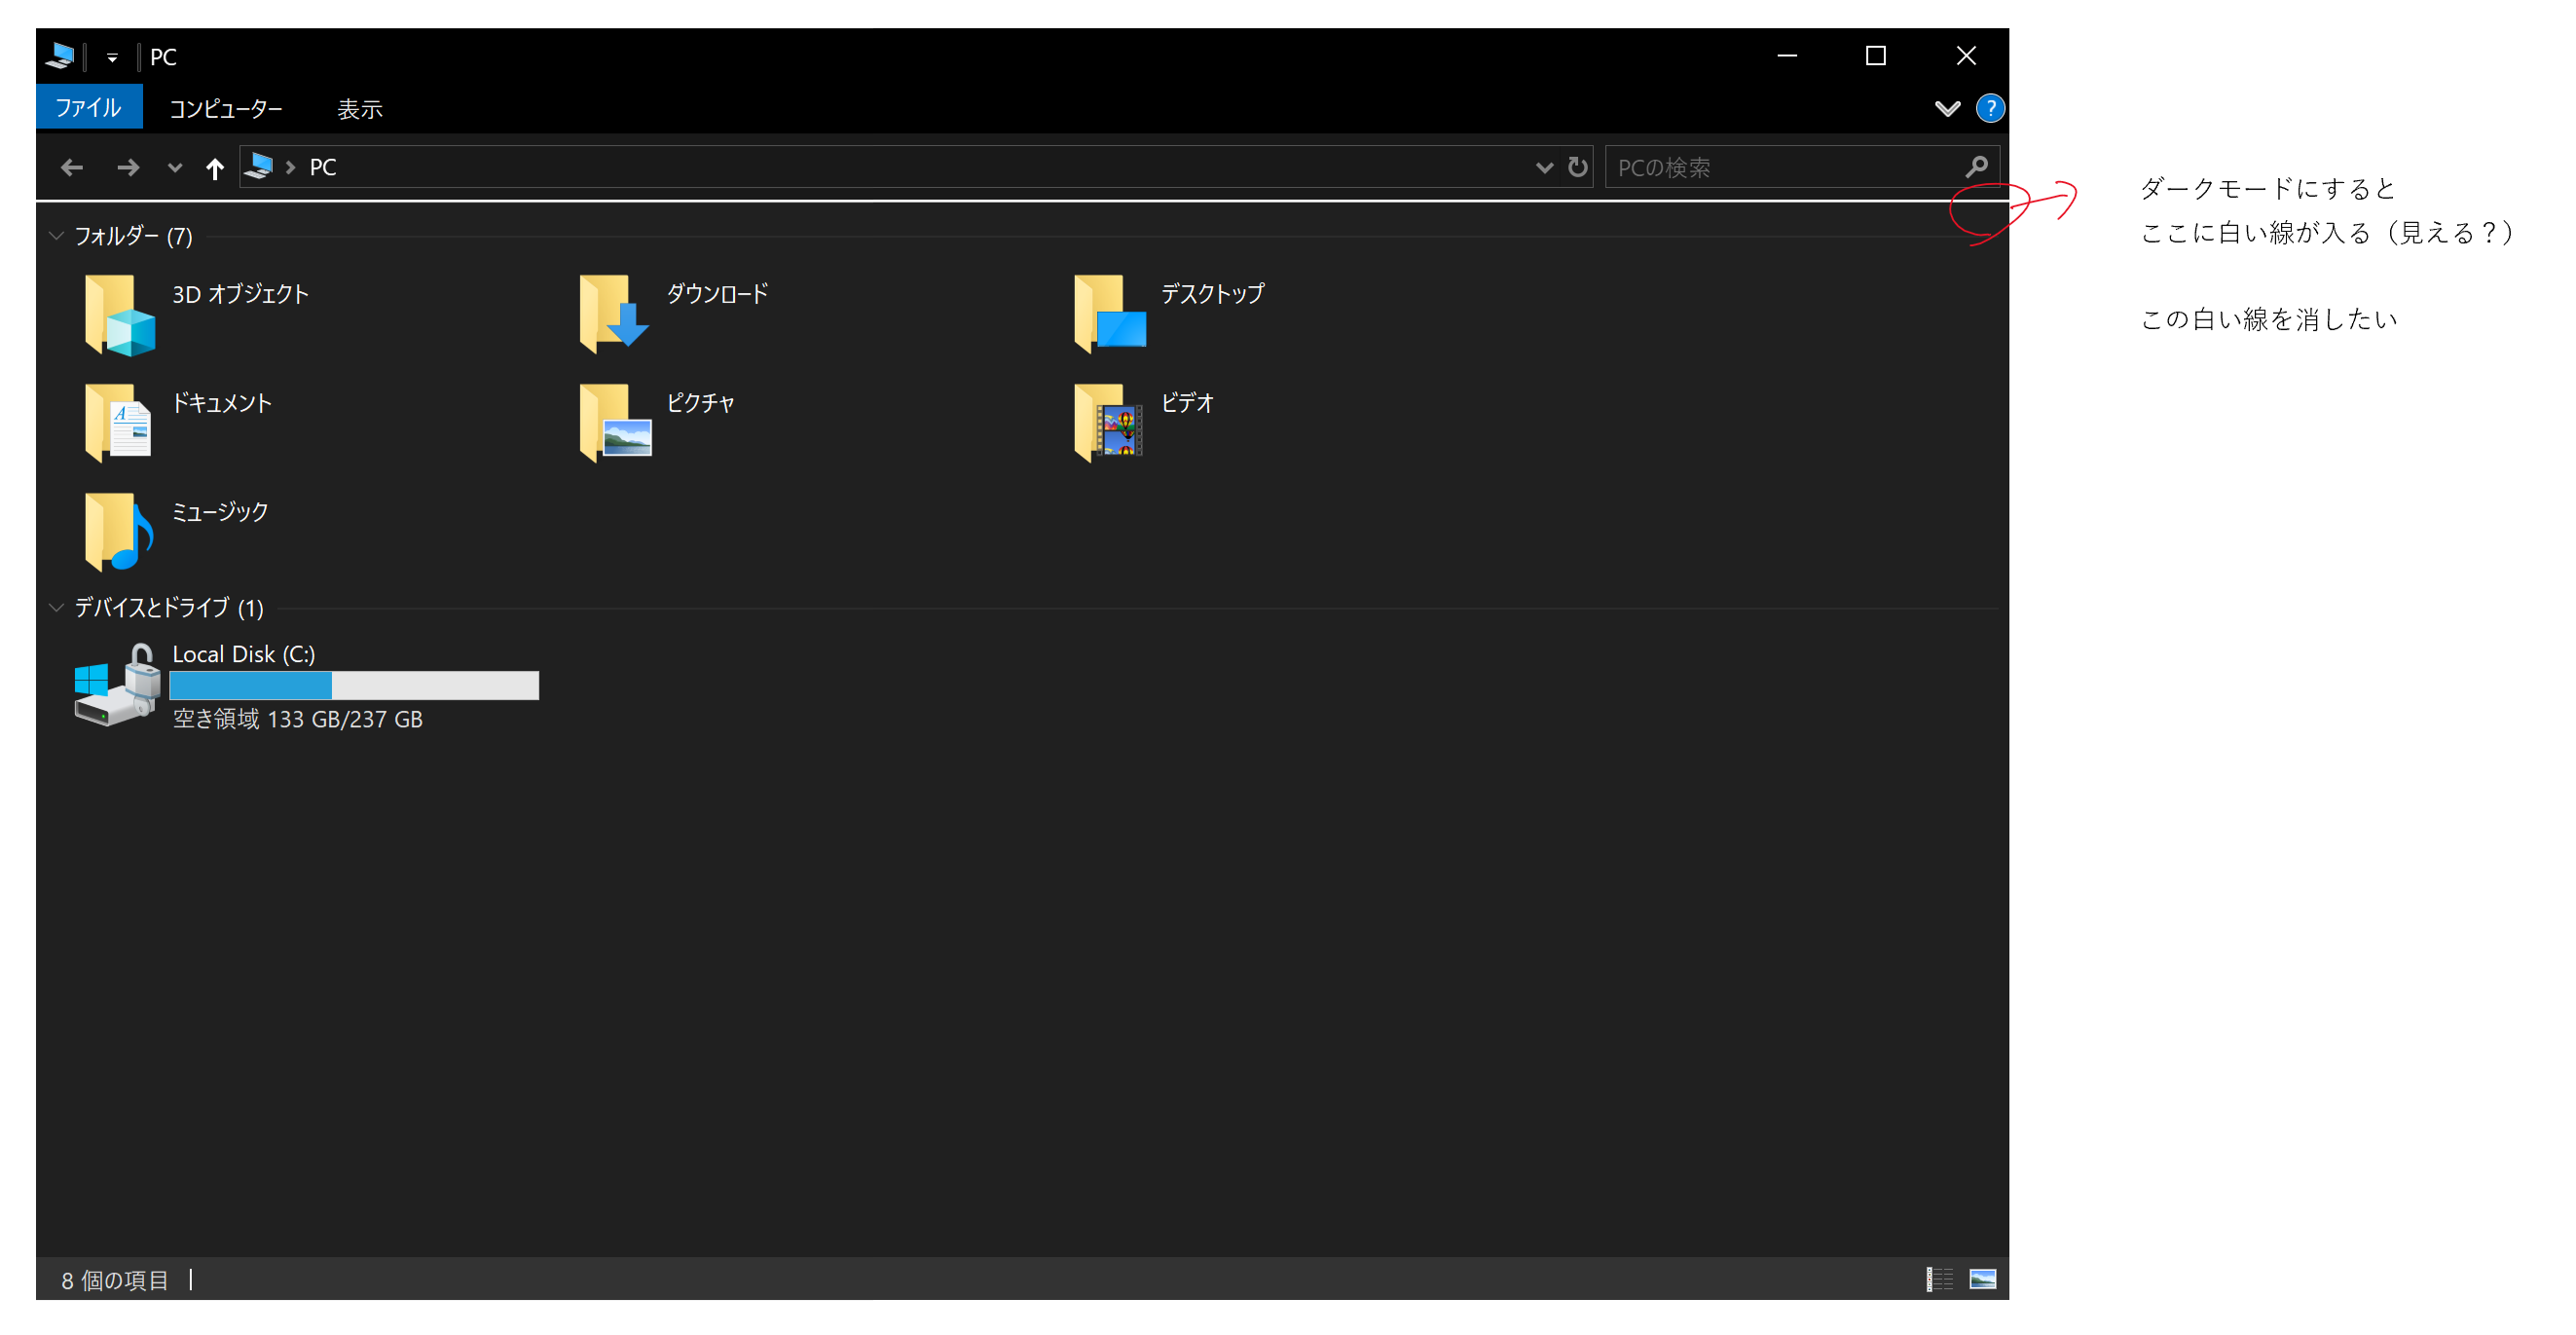 Windows 10 フォルダ ダークモード アドレス Microsoft コミュニティ